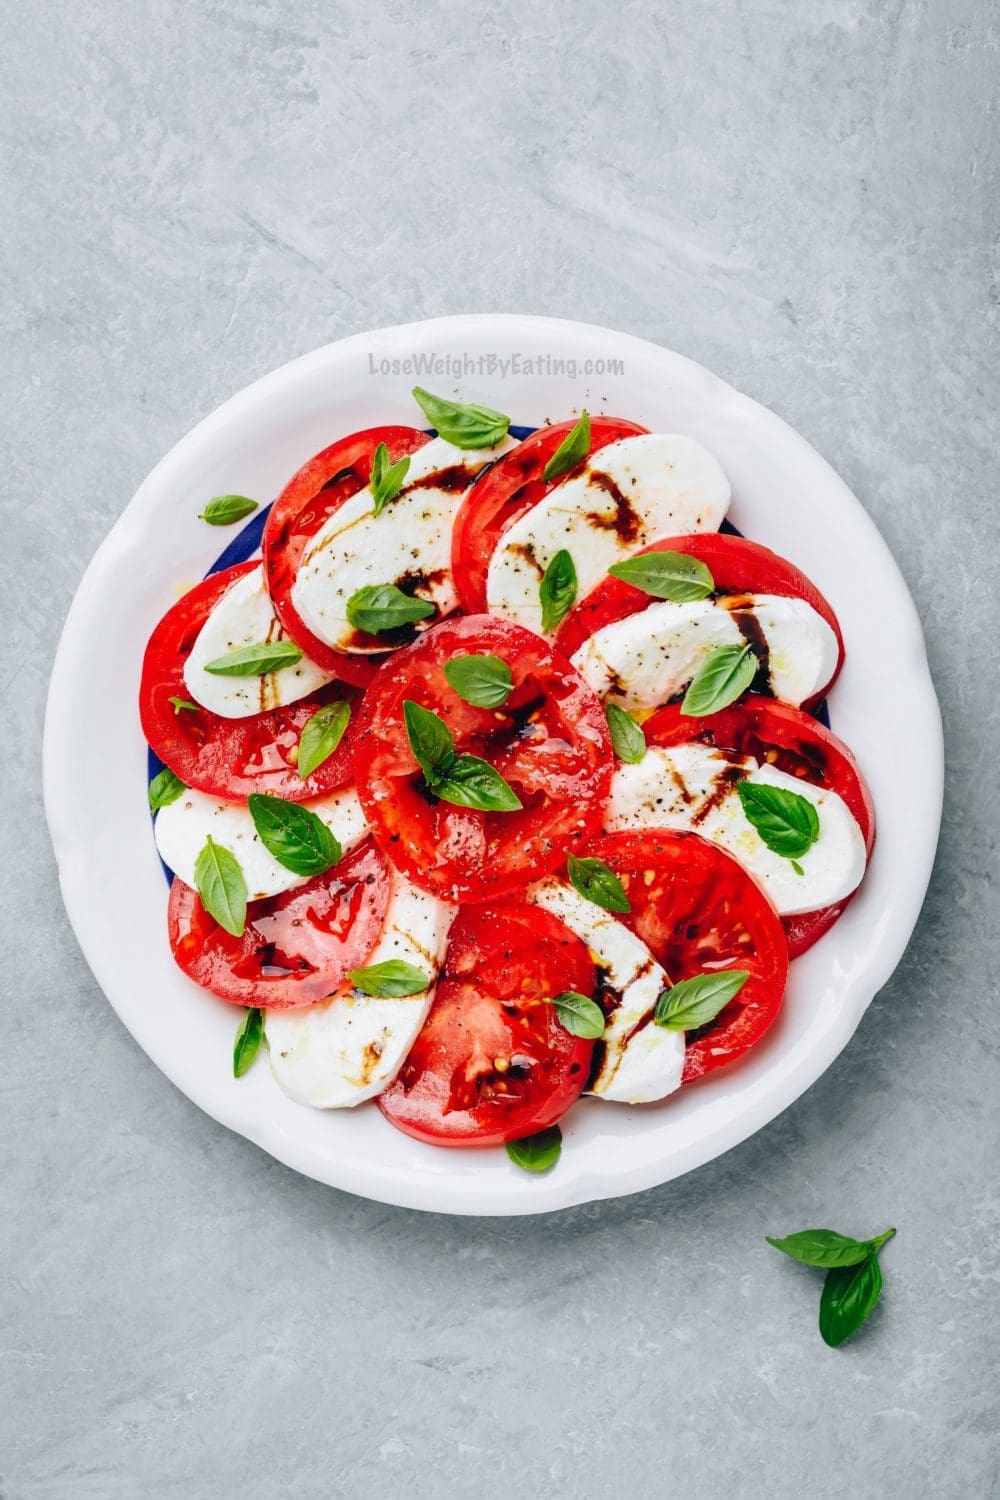 Recipes for Italian Food - Low Calorie Caprese Salad Recipe